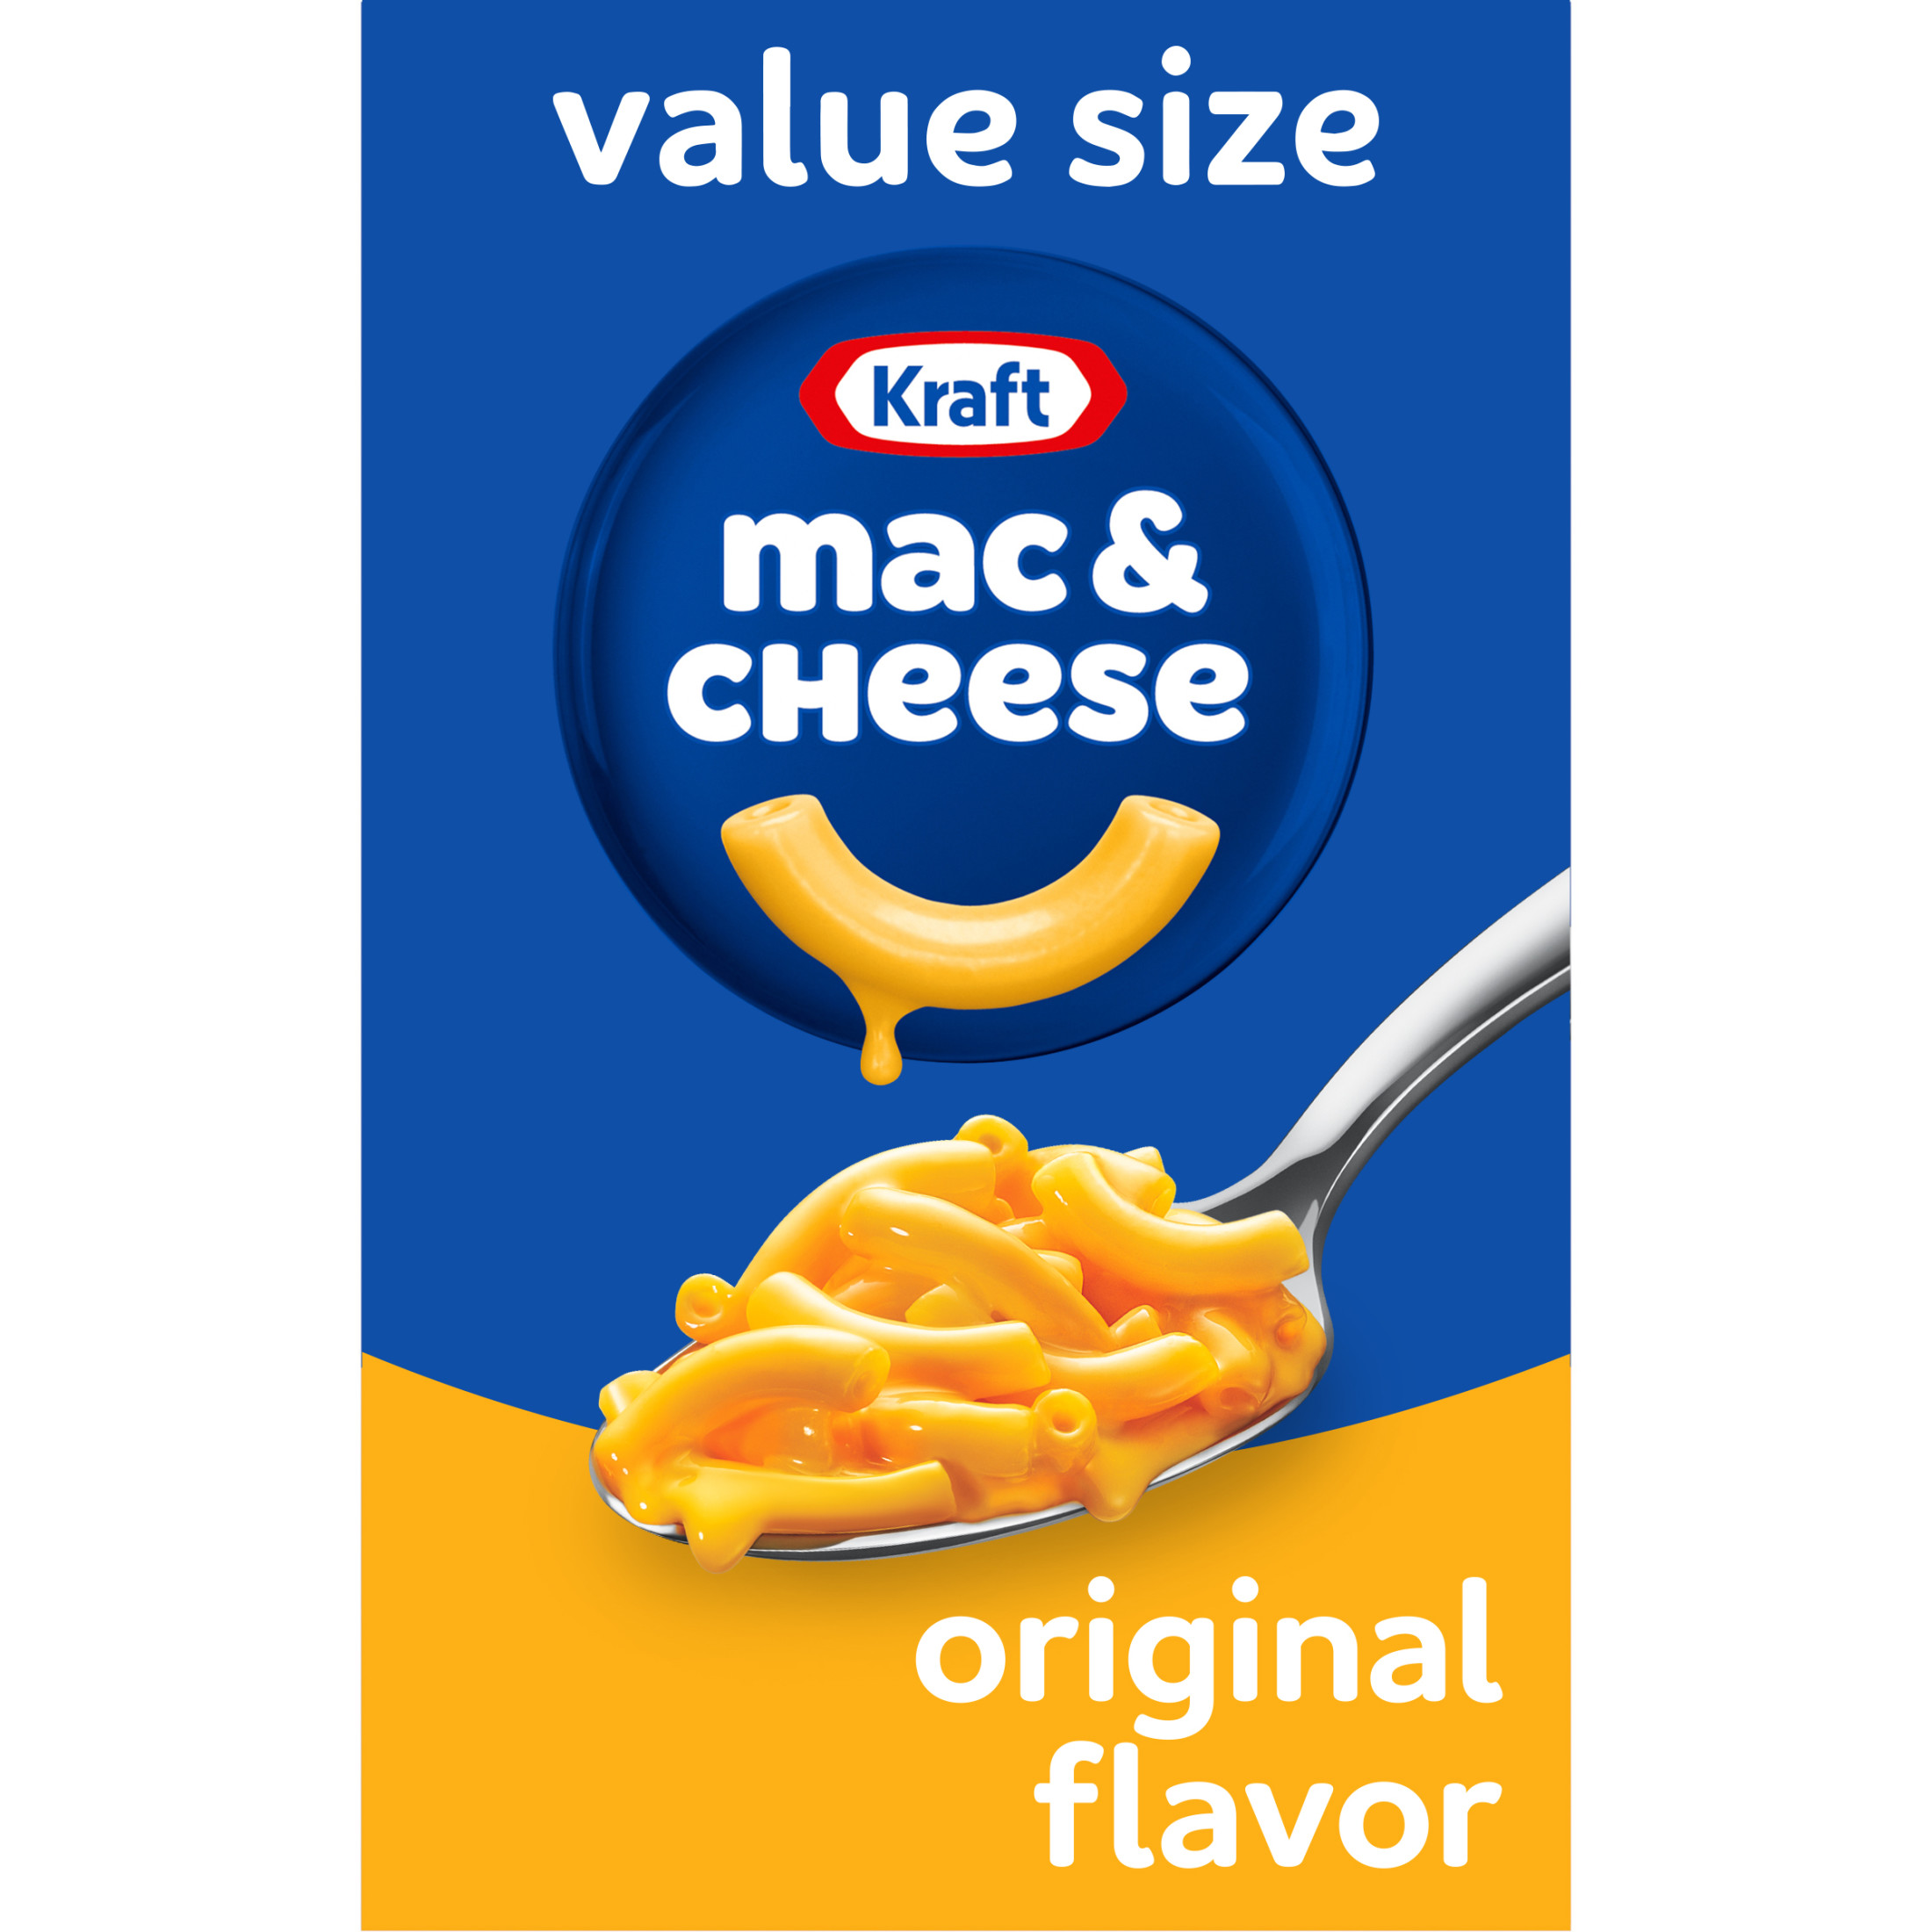 Kraft Original Mac N Cheese Macaroni and Cheese Dinner Value Size, 14.5 oz Box - image 1 of 14